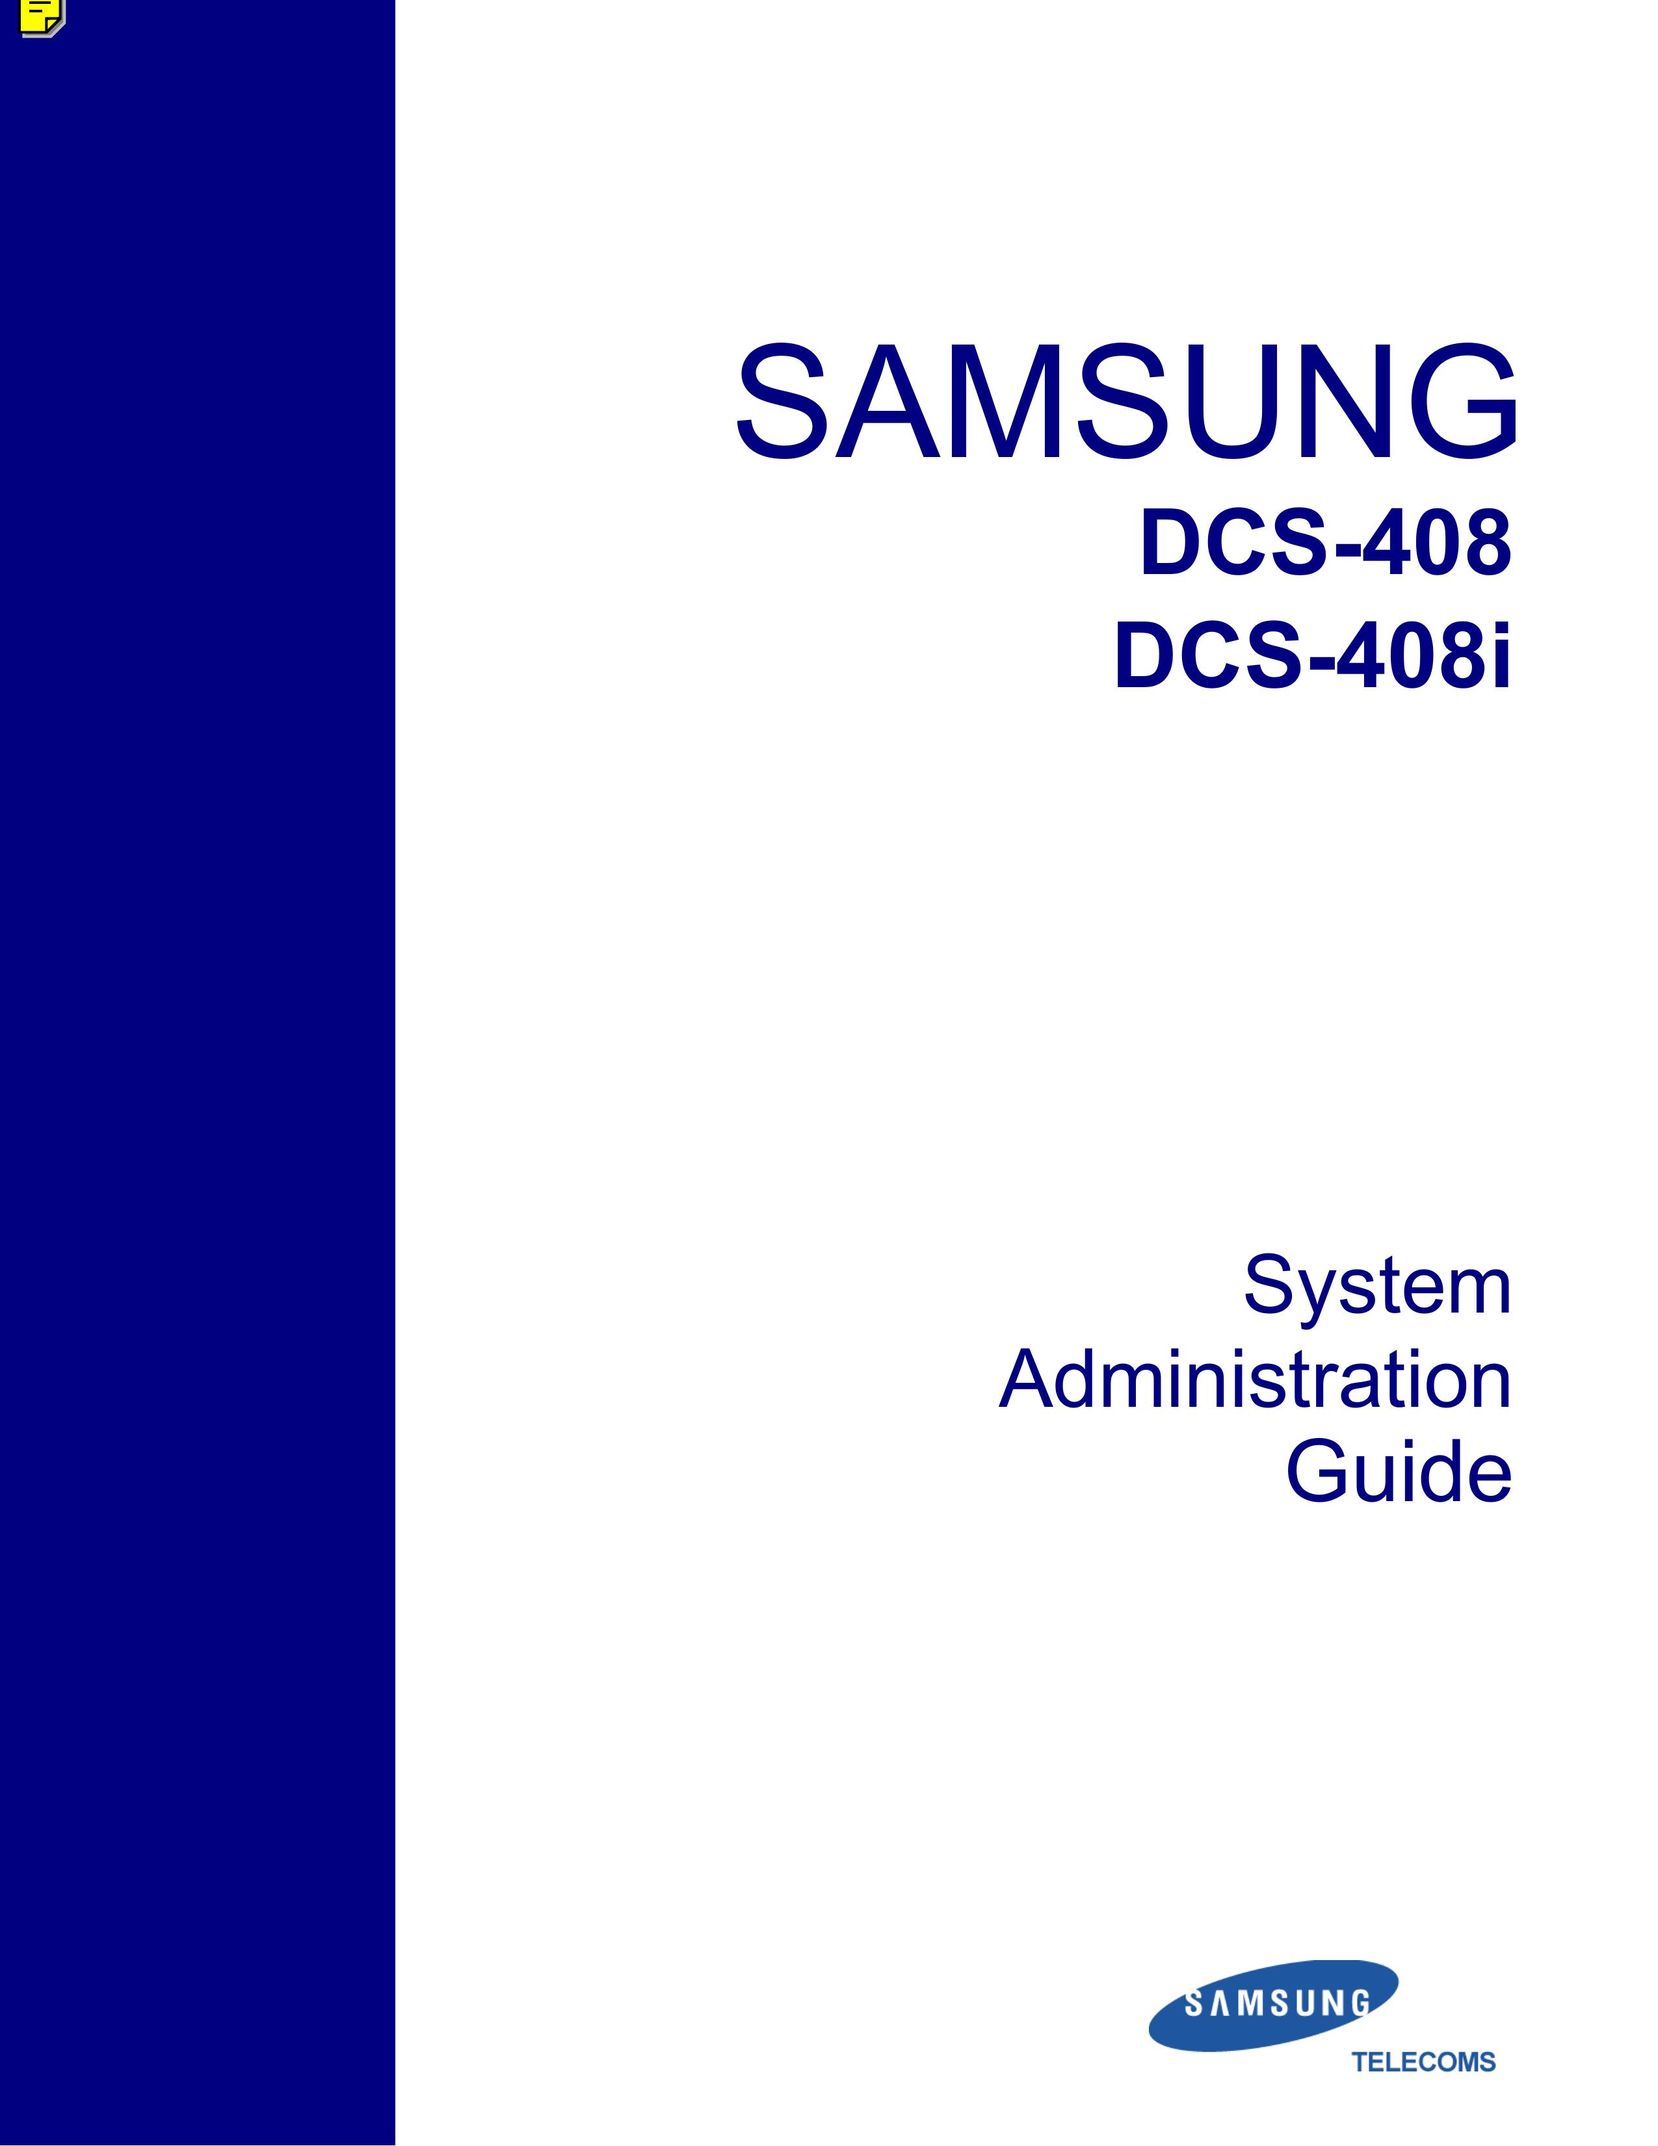 Samsung DCS-408 Telephone User Manual